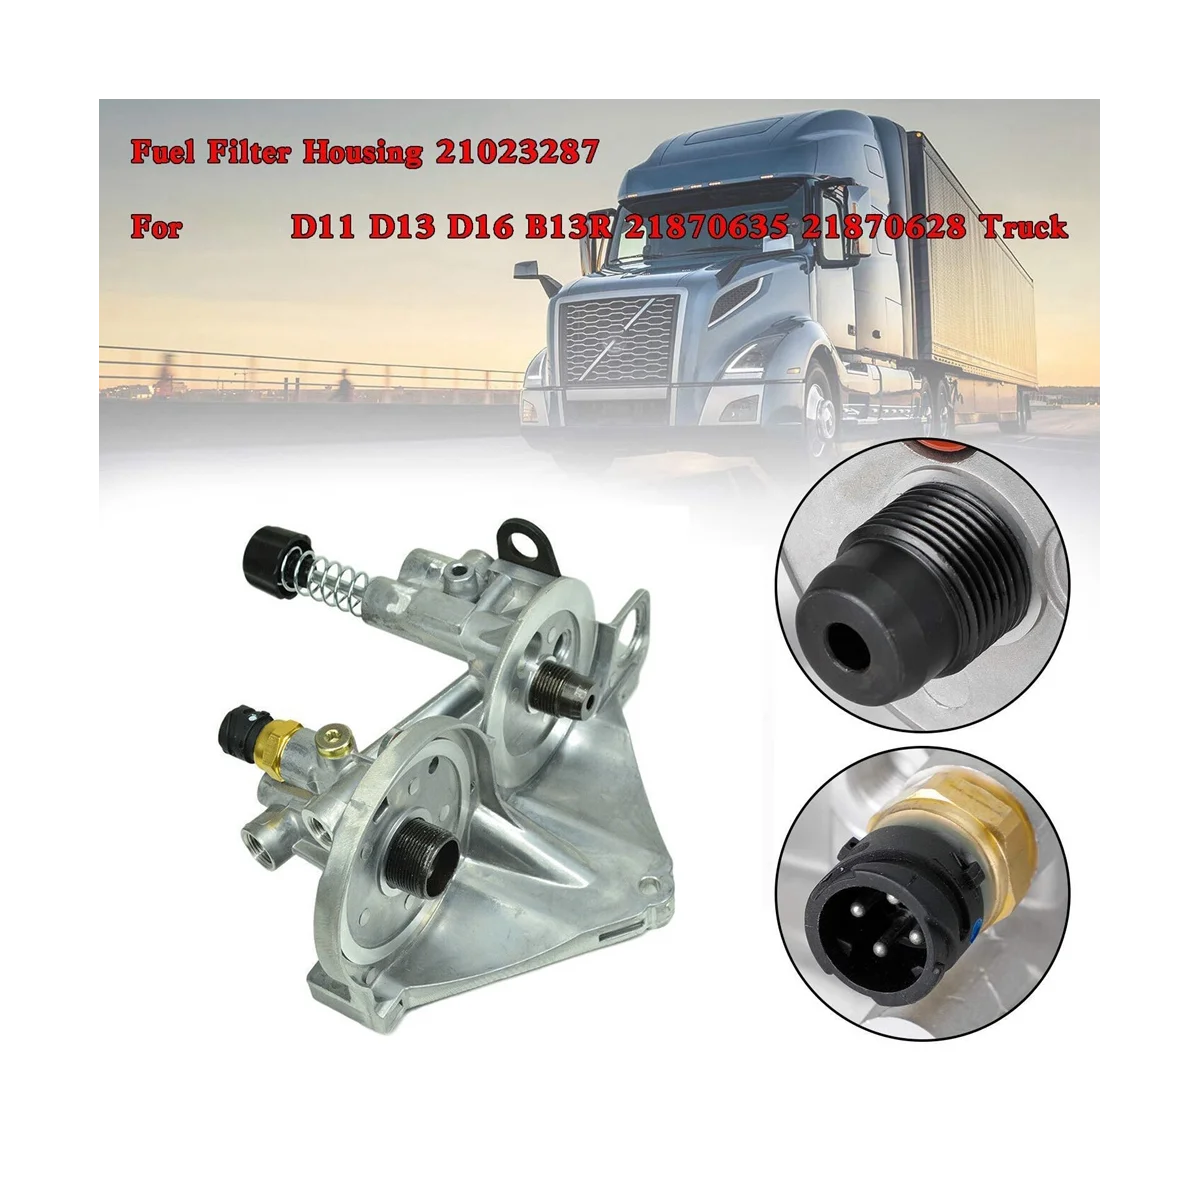 

For Volvo D11 D13 D16 B13R Truck Fuel Filter Housing 21870635 21870628 21023287